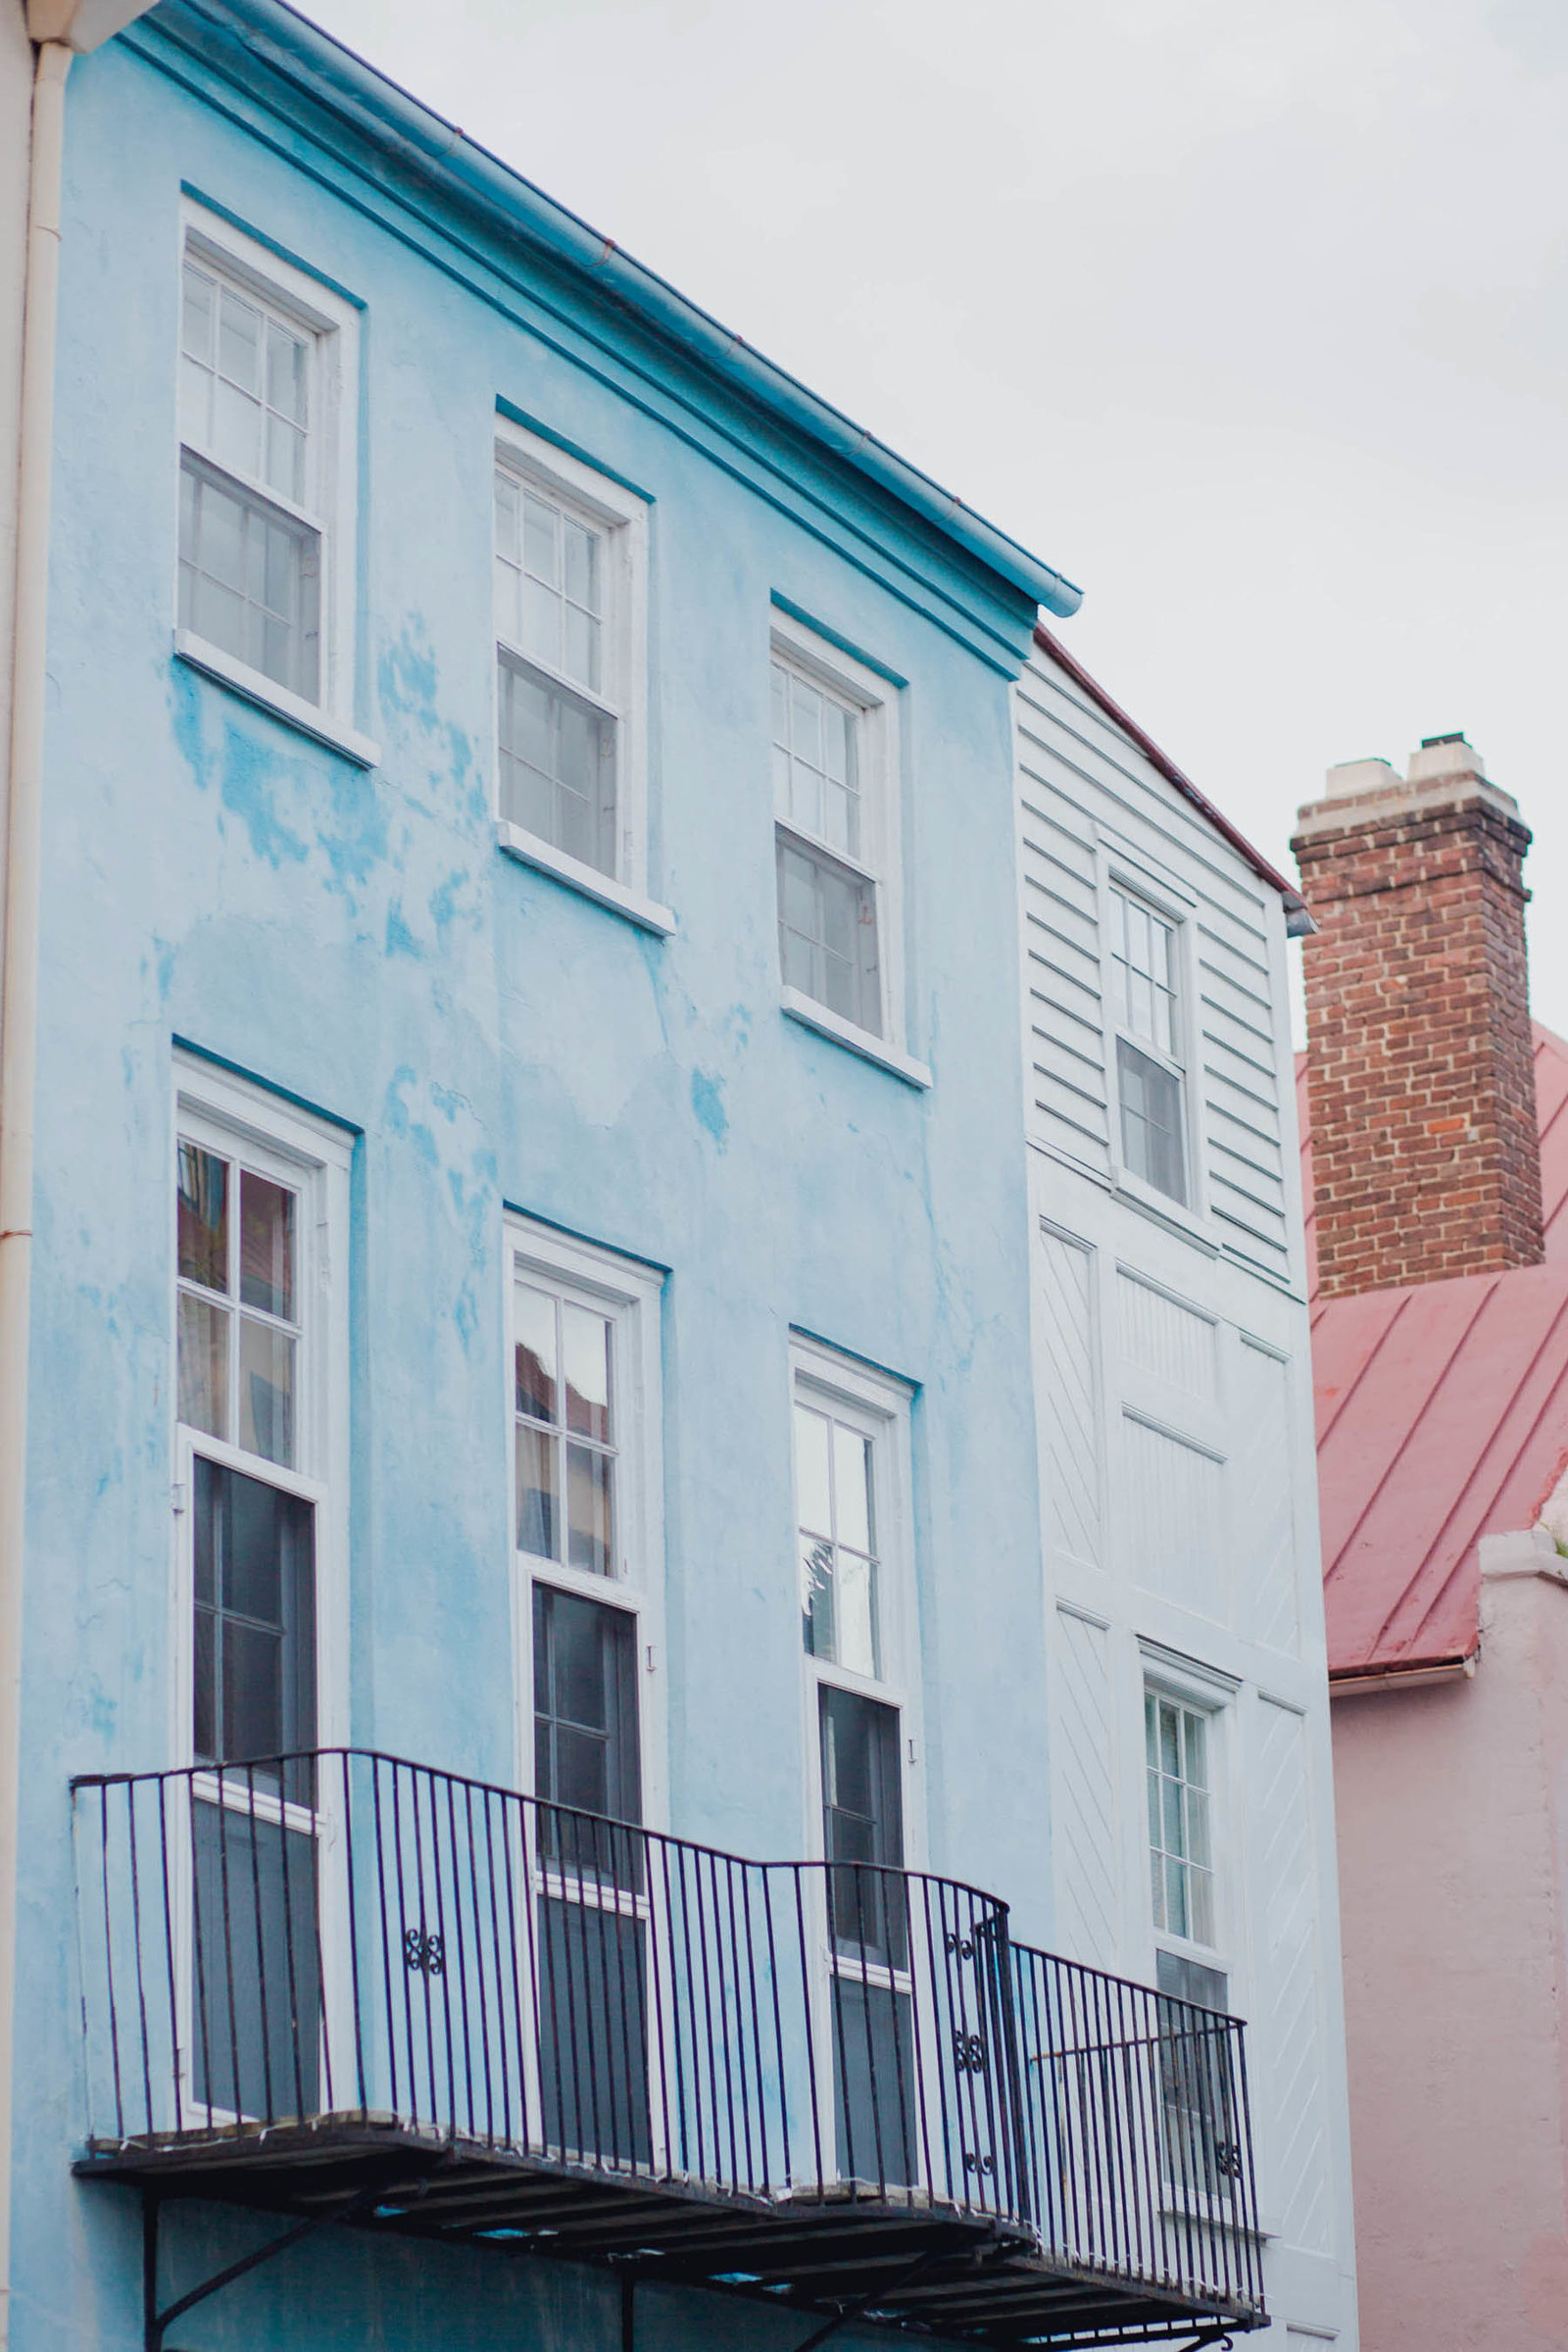 French Quarter blue building in Charleston, SC.